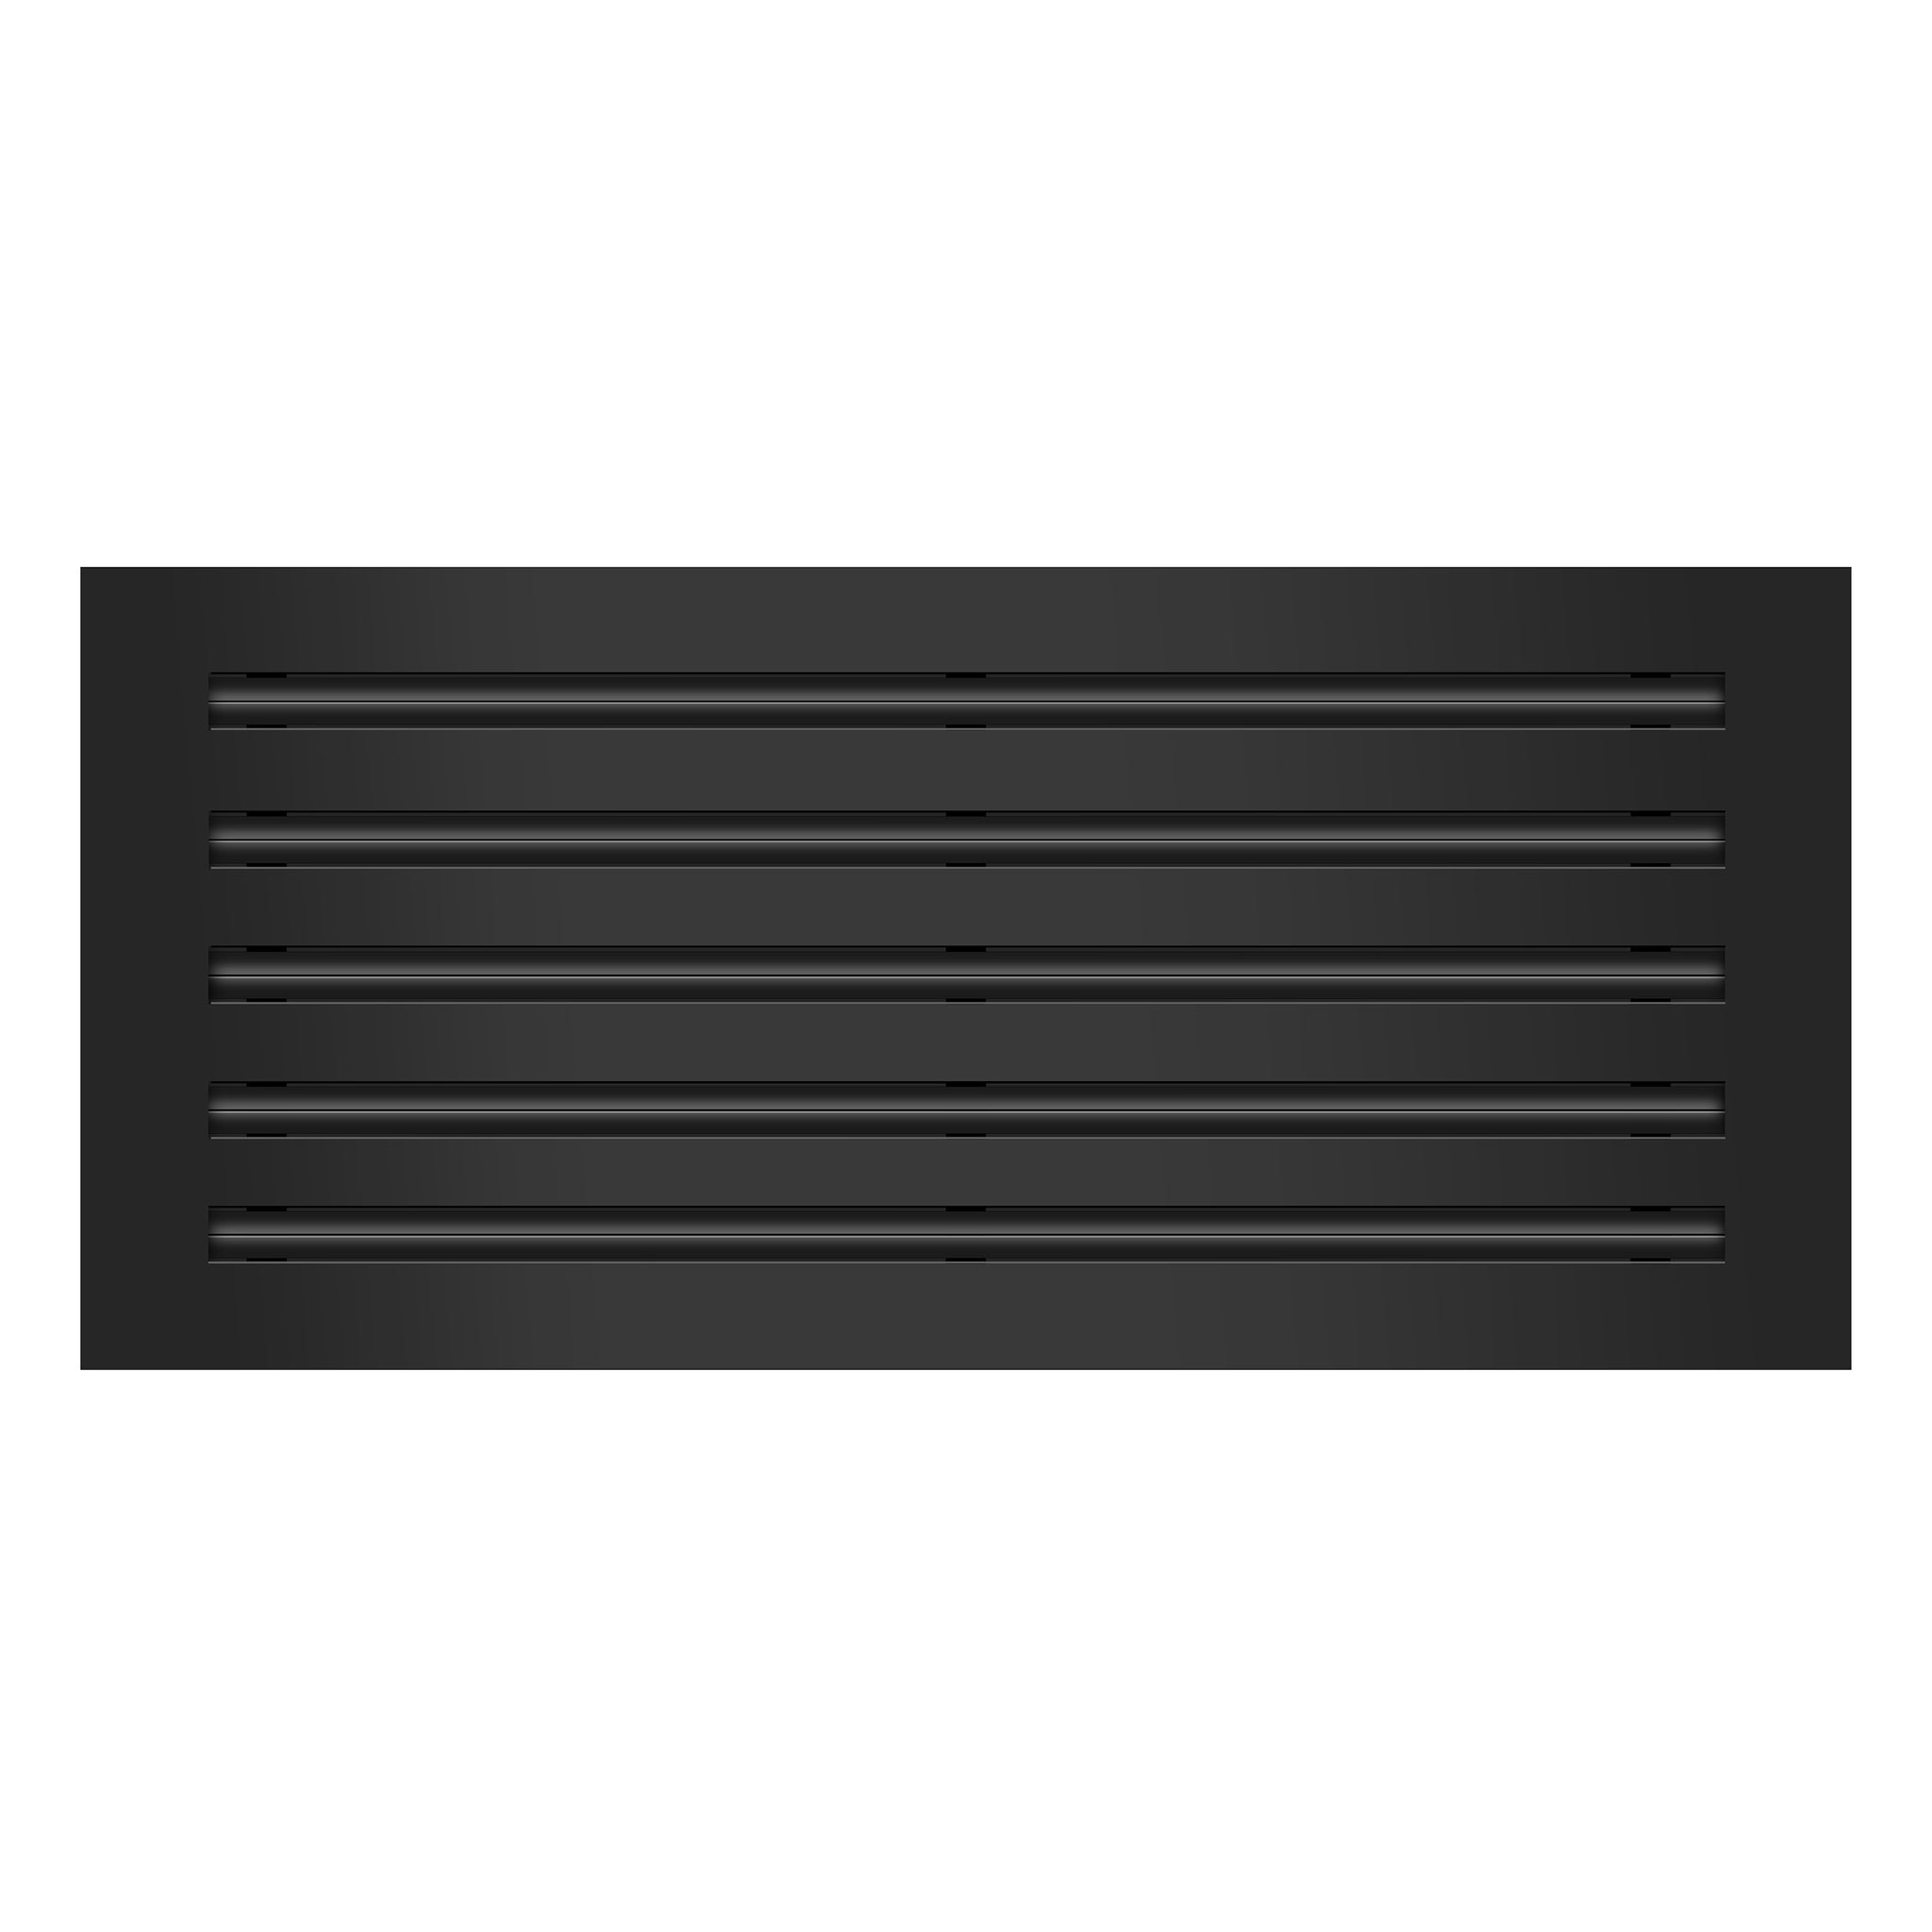 Front of 22x10 Modern Air Vent Cover Black - 22x10 Standard Linear Slot Diffuser Black - Texas Buildmart